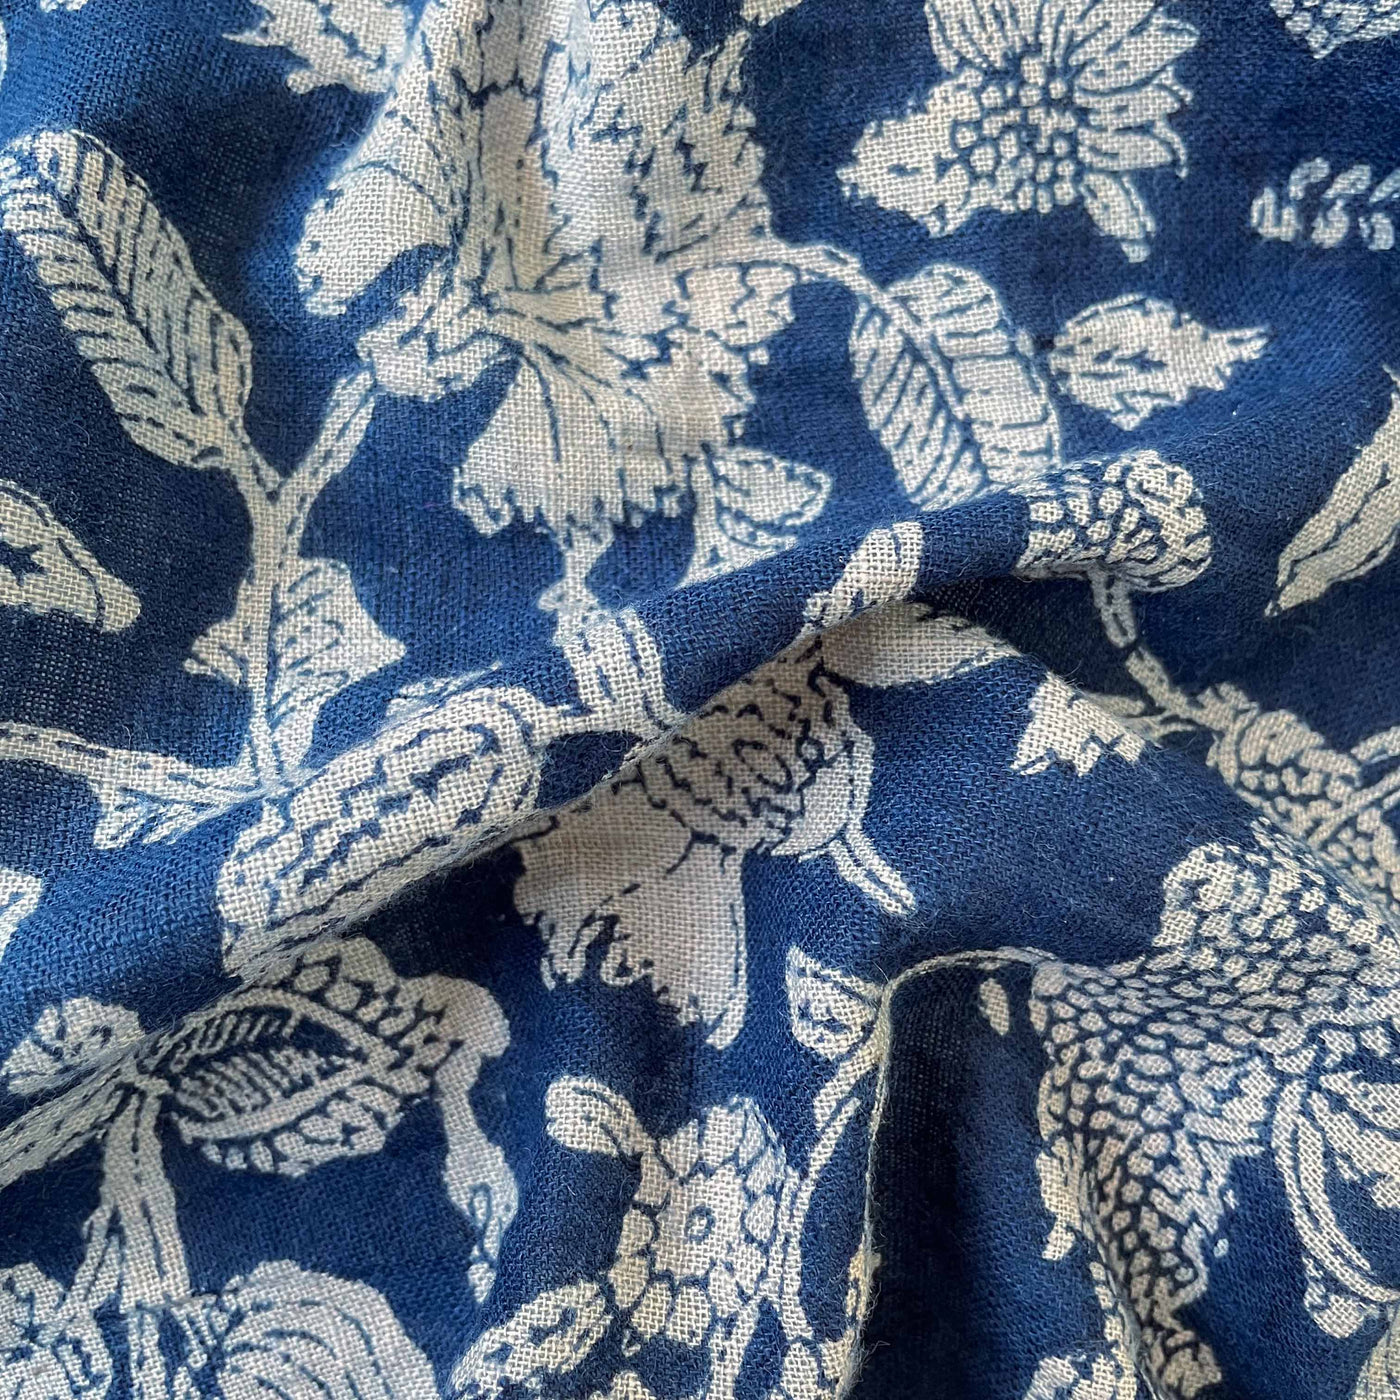 Printed Cotton Linen Fabric Cut Piece (CUT PIECE) Indigo Blue Garden Of Wildflowers Hand Block Printed Pure Cotton Linen Fabric (Width 42 inches)